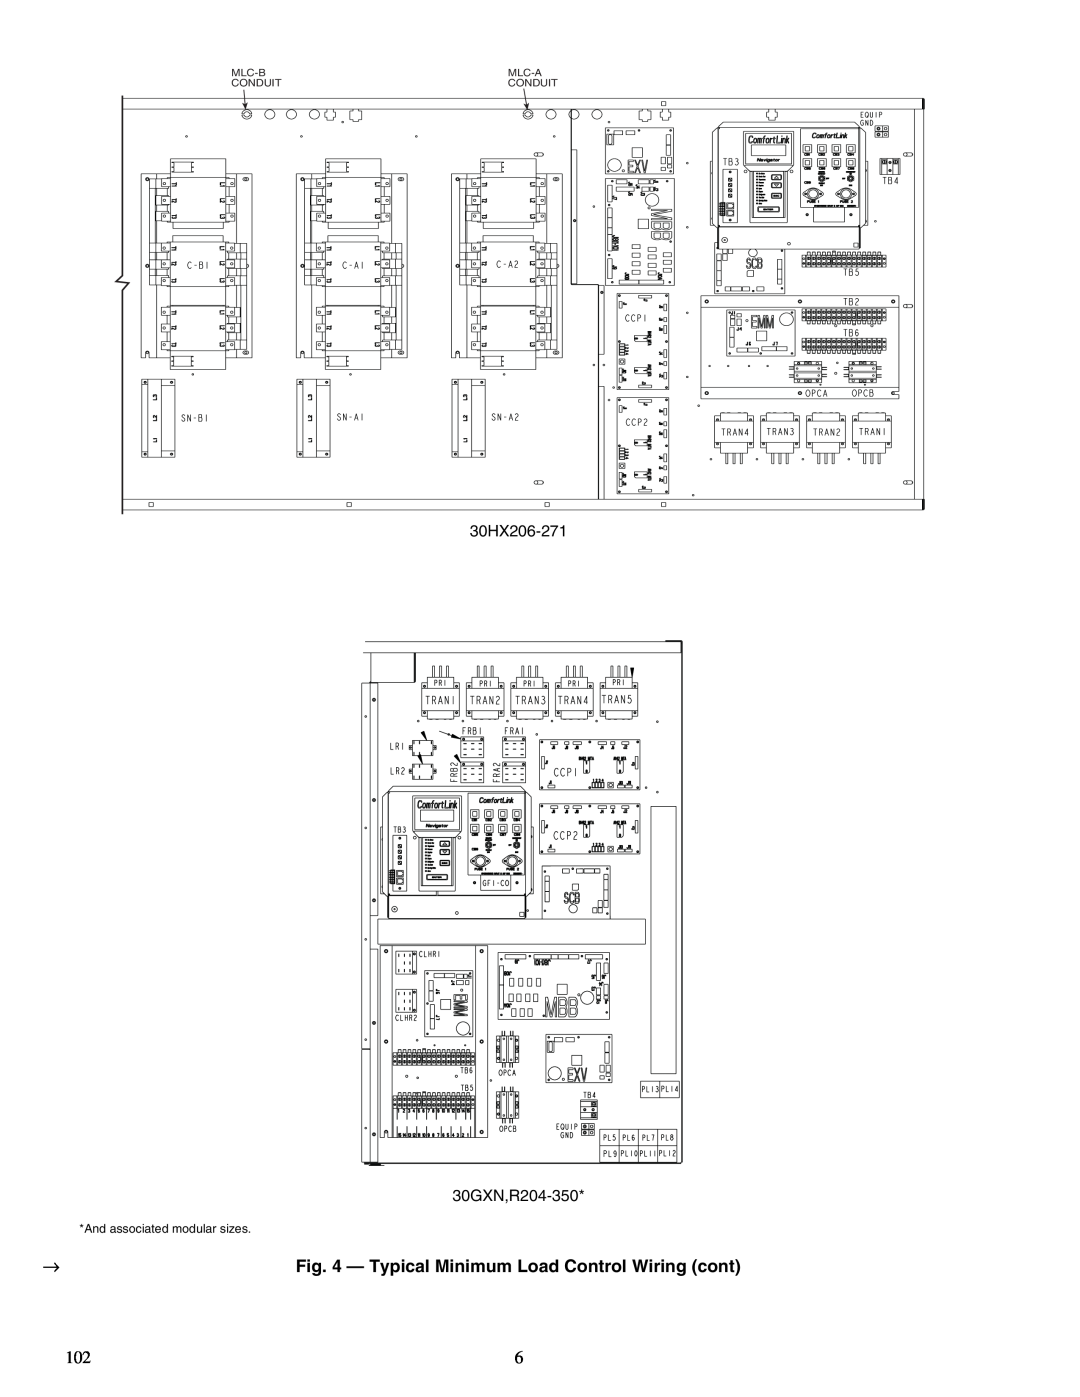 Carrier R080-528 Typical Minimum Load Control Wiring cont, 30HX206-271, 30GXN,R204-350, Mlc-B, Mlc-A, Conduit 